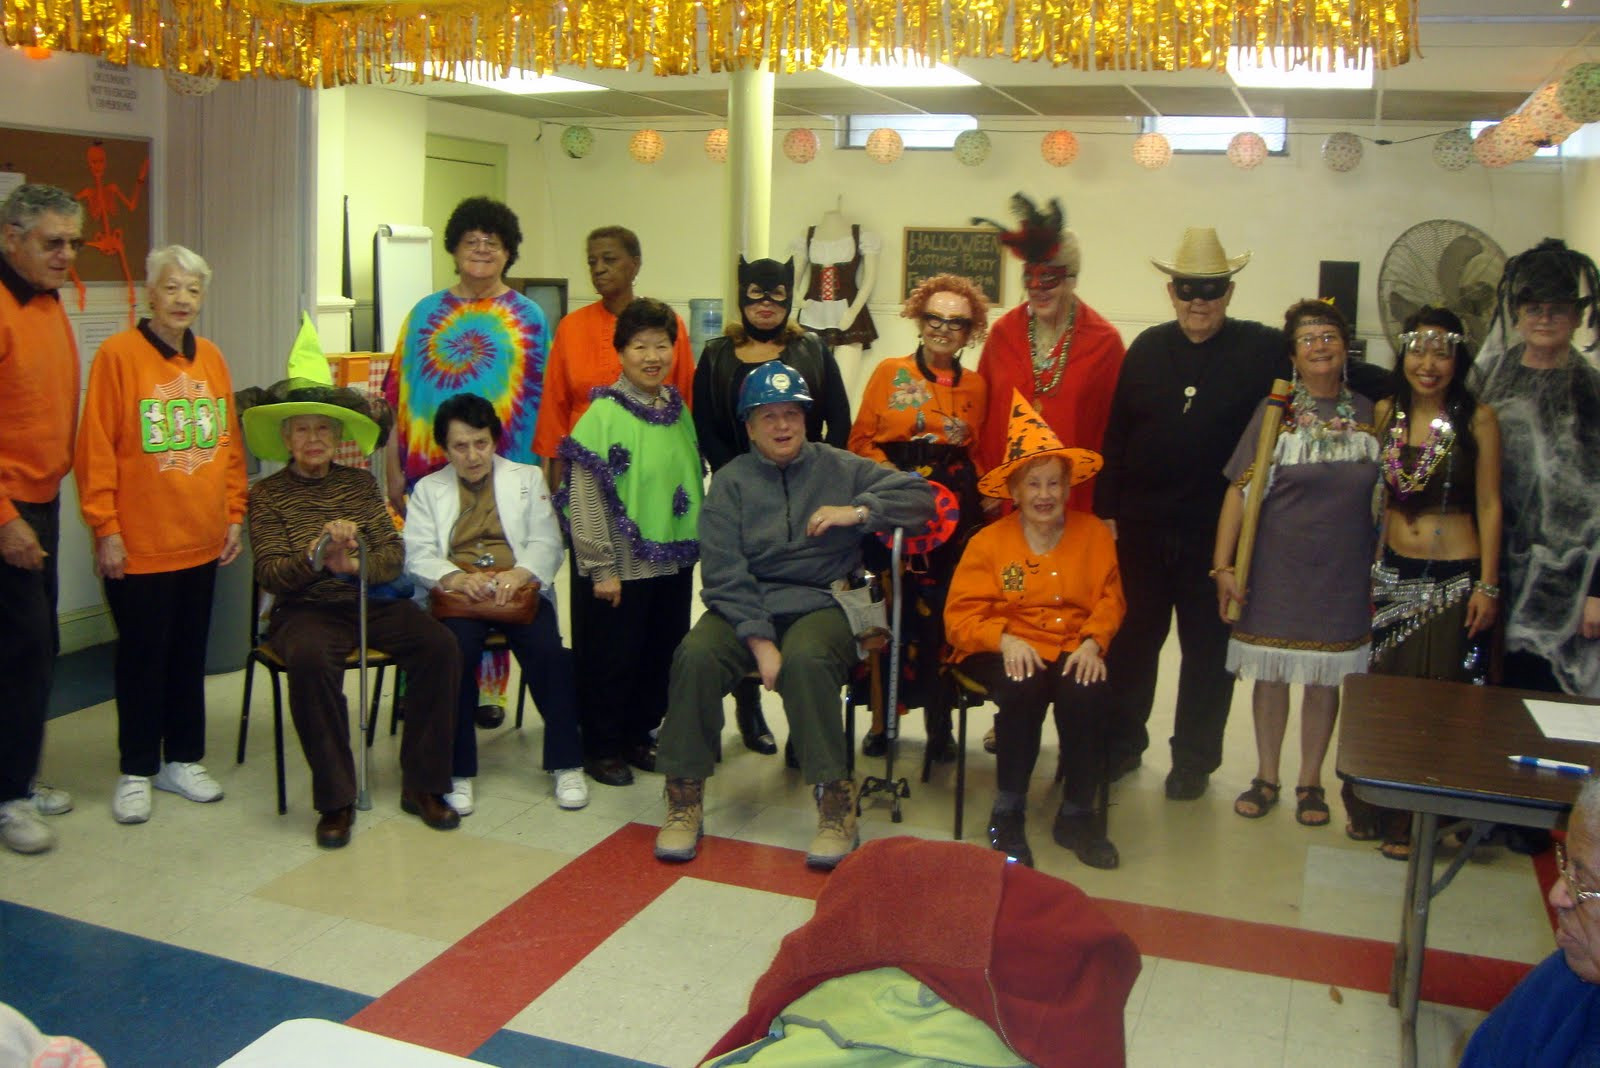 Halloween Party Ideas For Seniors
 Dorchester Senior Citizens Center Inc Halloween Costume